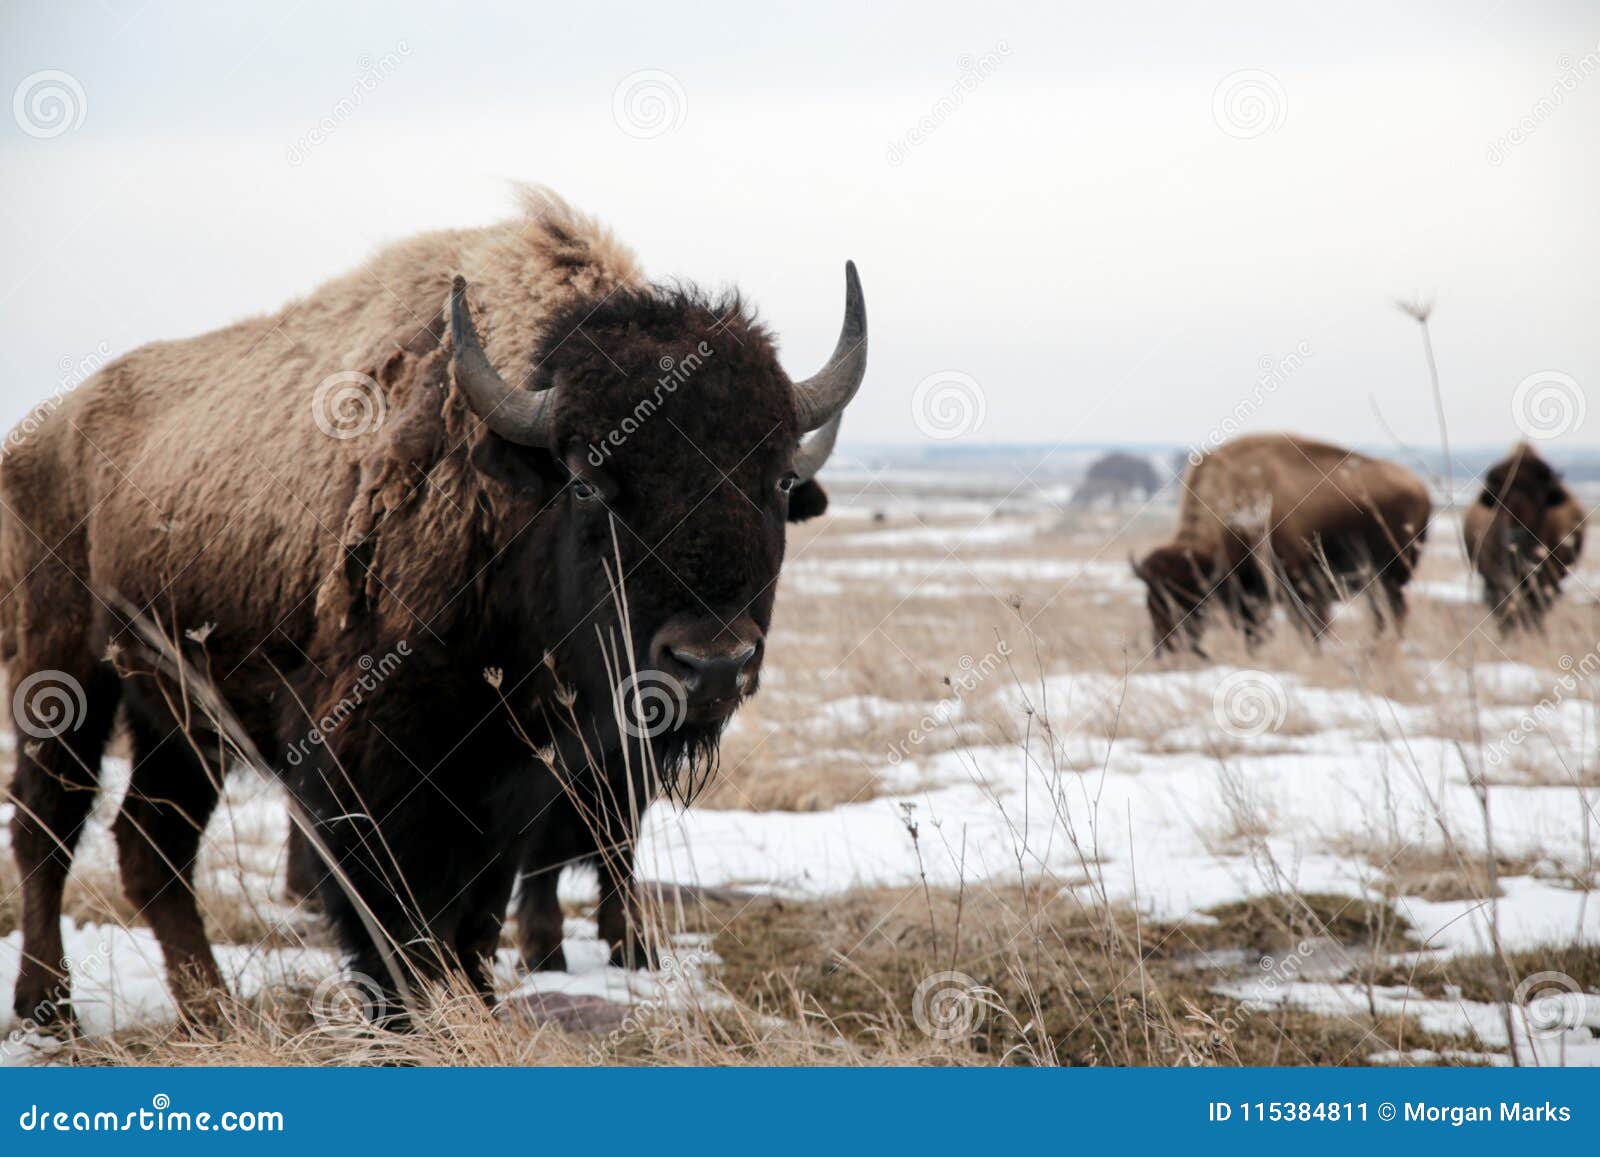 bison in a snowy field